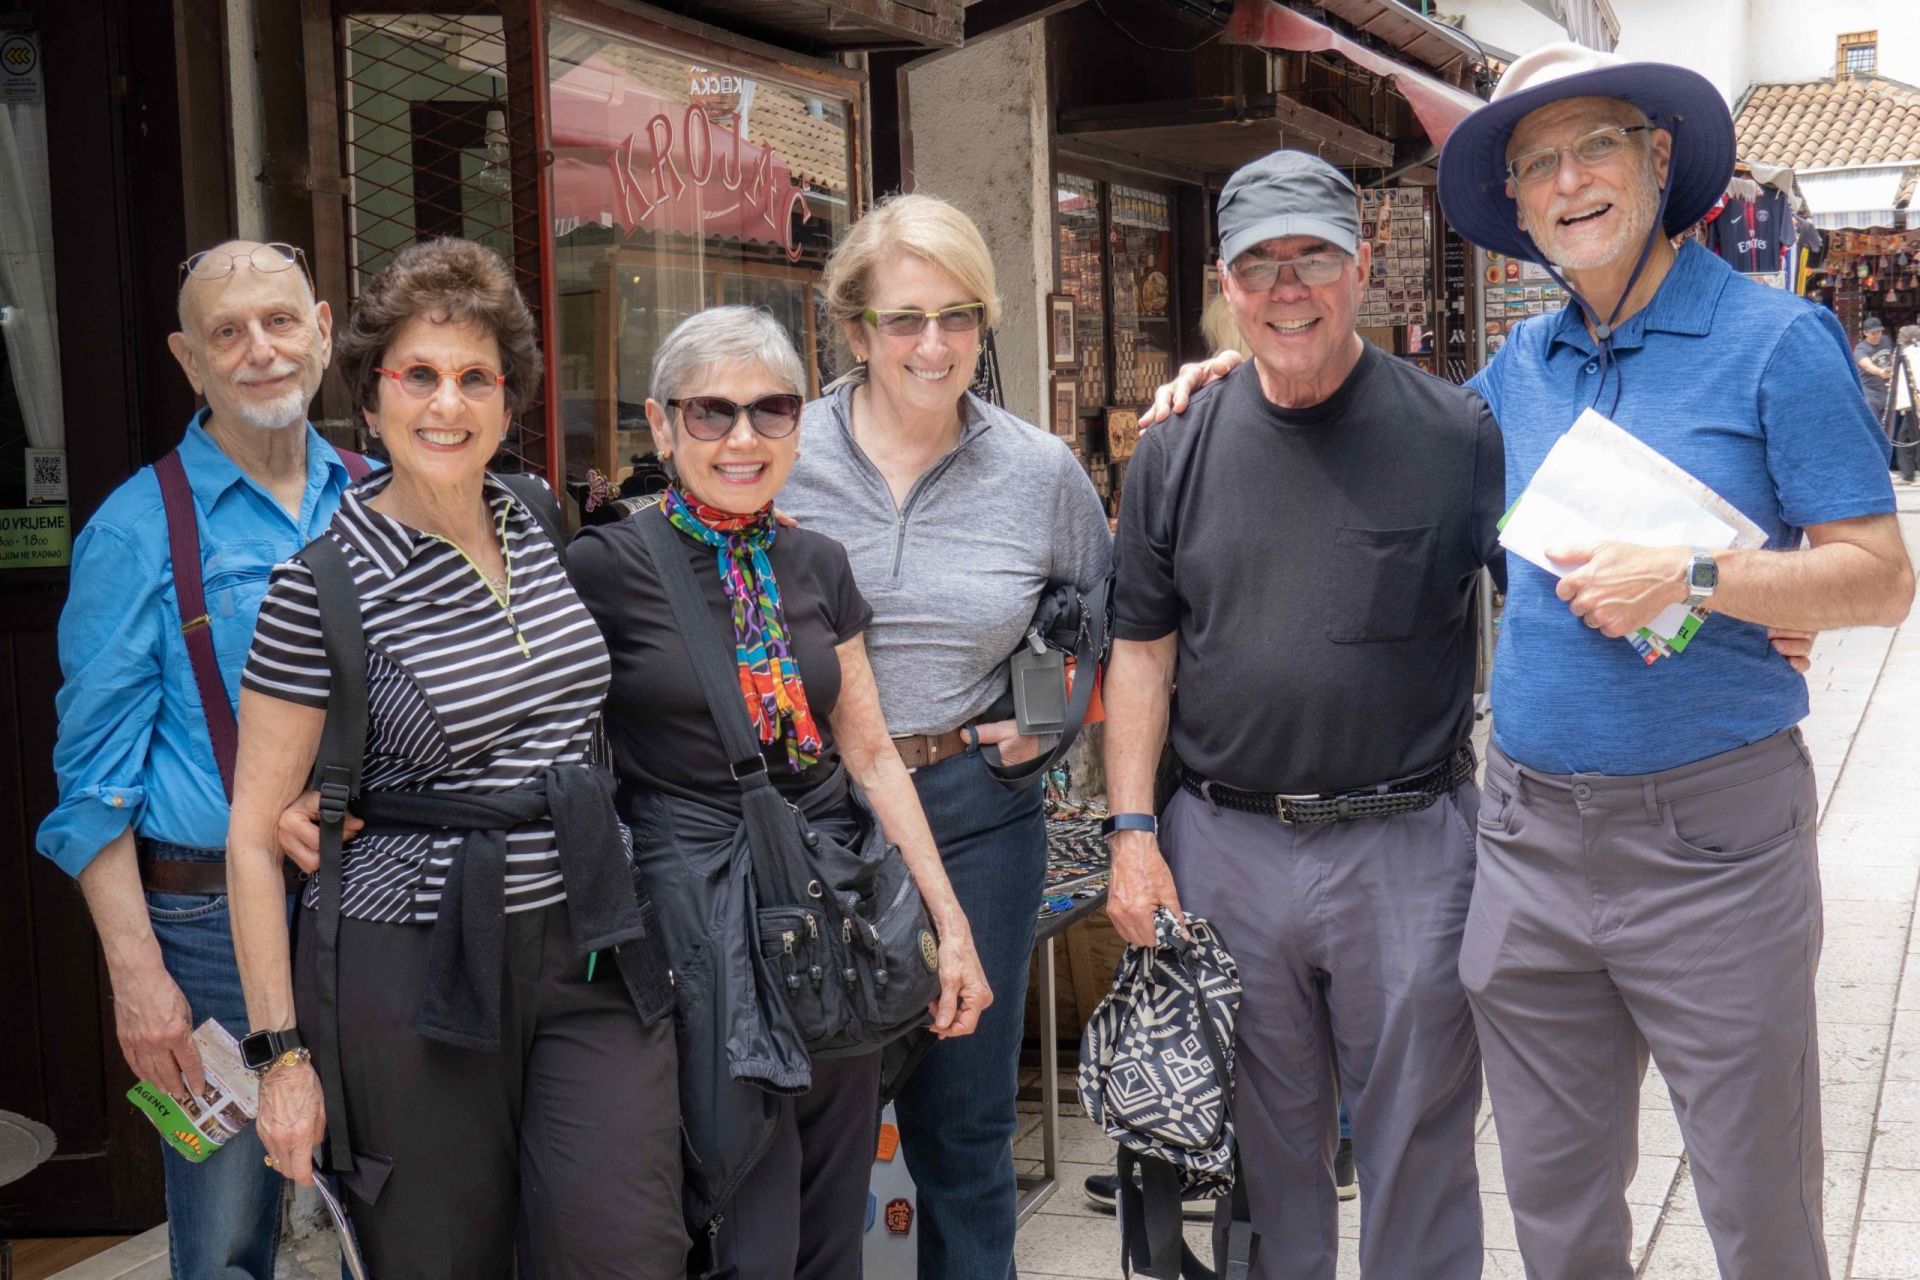 Our Jewish Heritage Travelers  